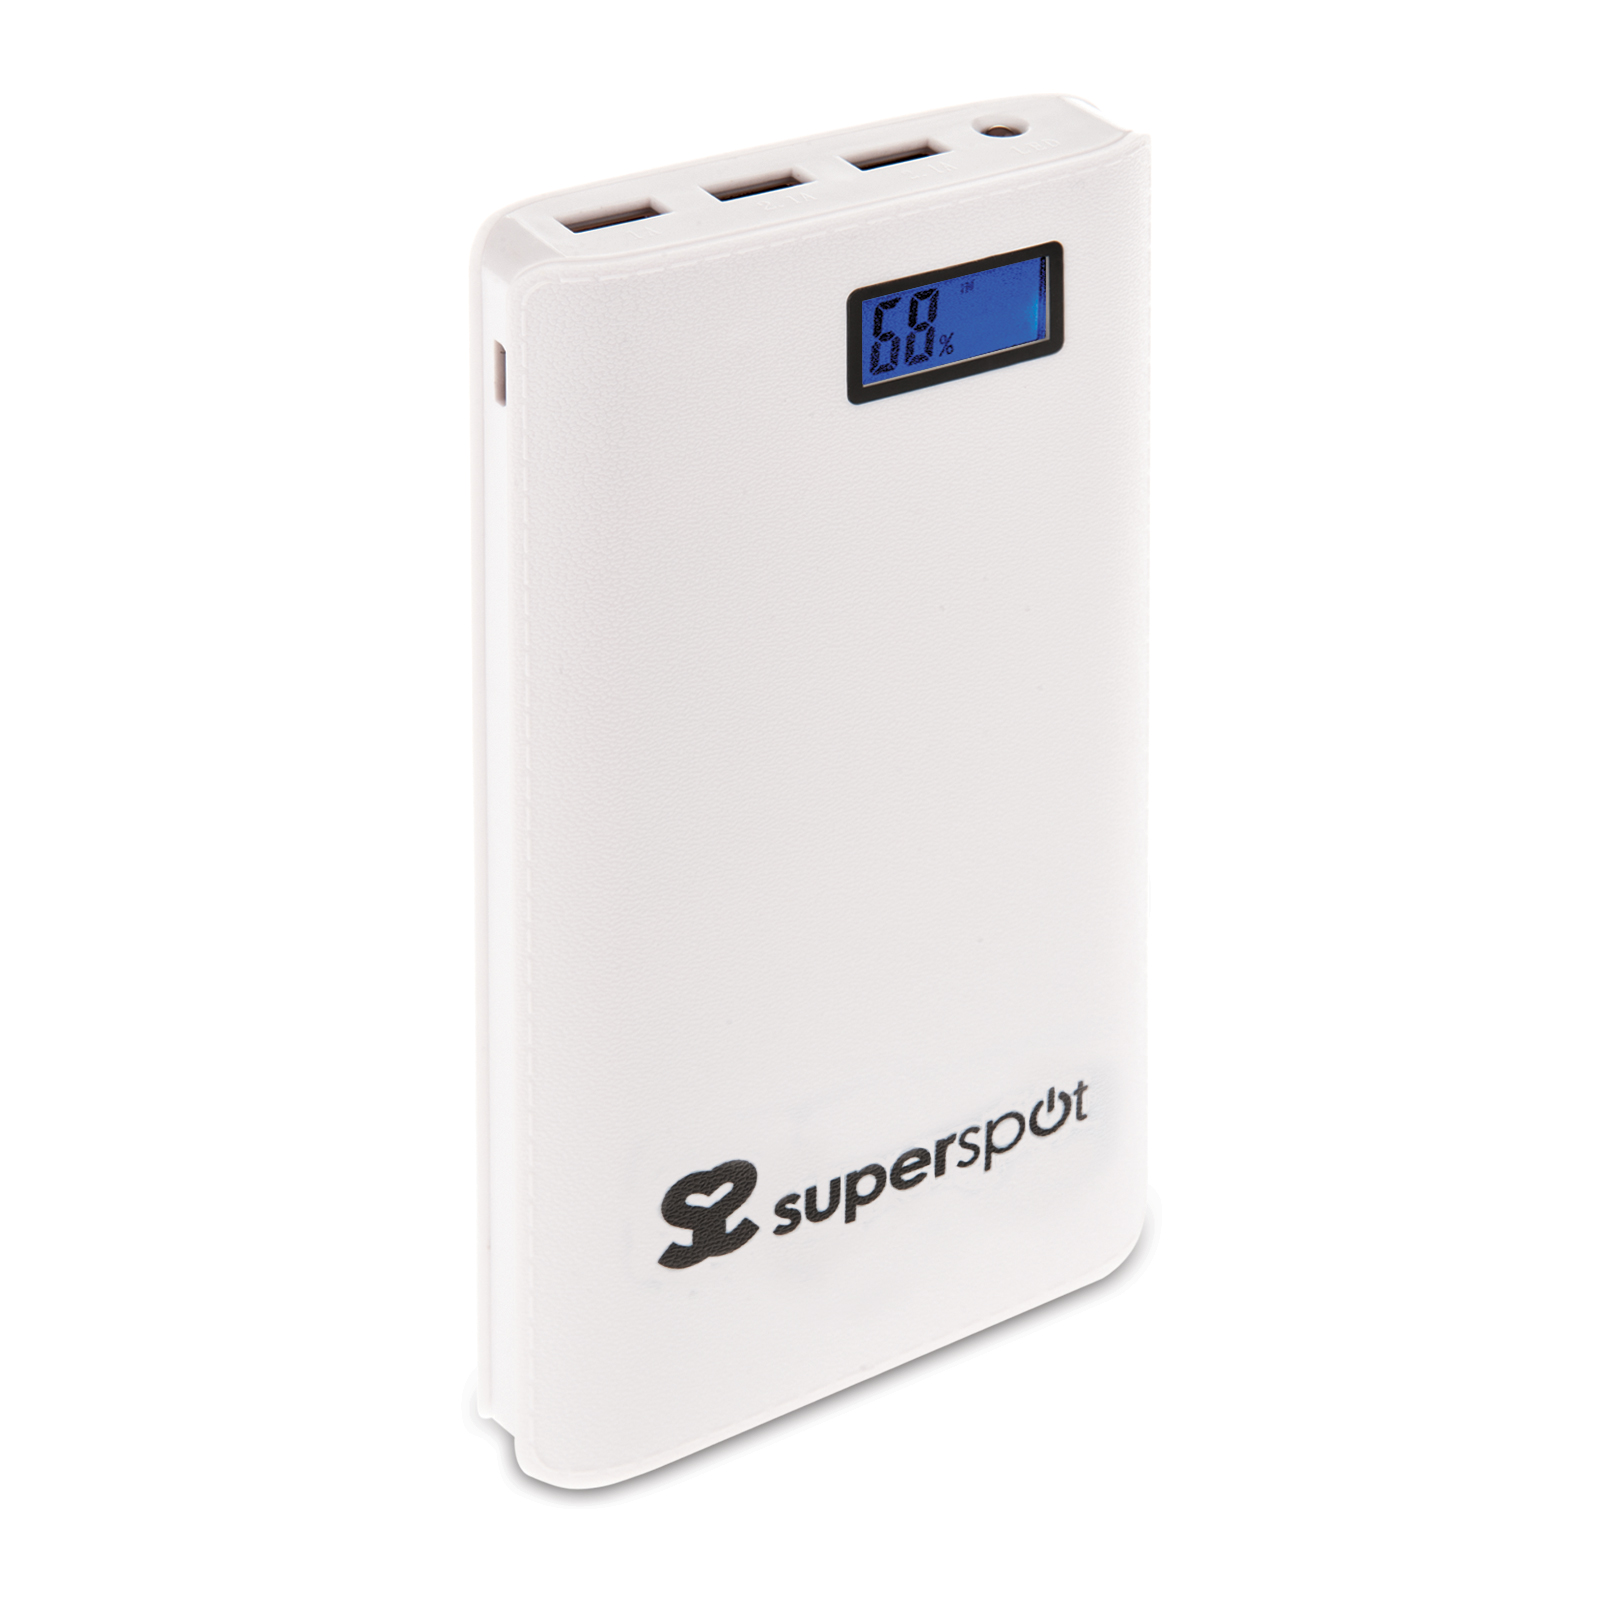 SuperSpot Executive 20800 mAh Powerbank- White